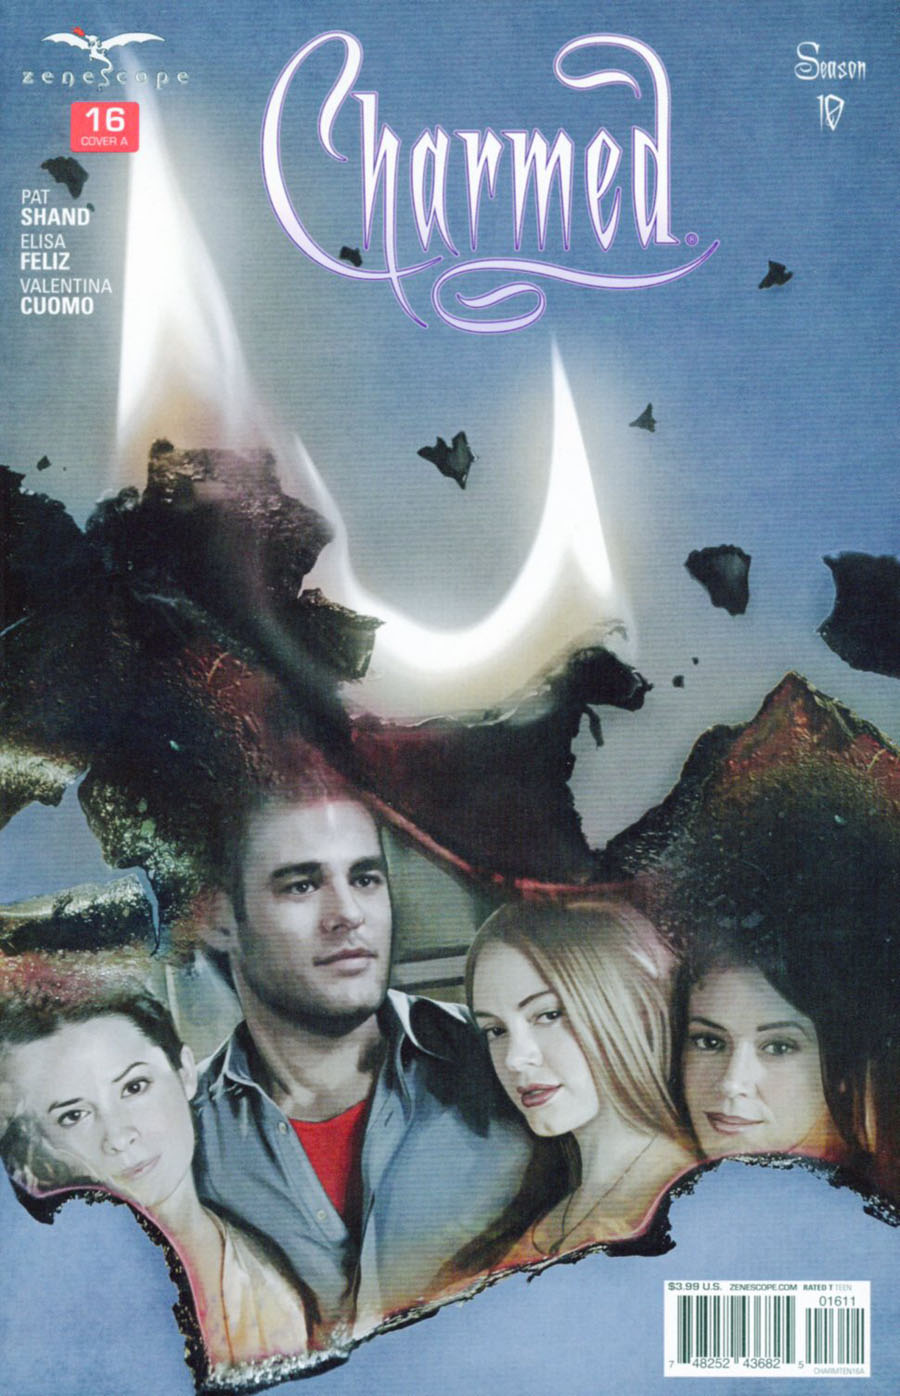 Charmed Season 10 #16